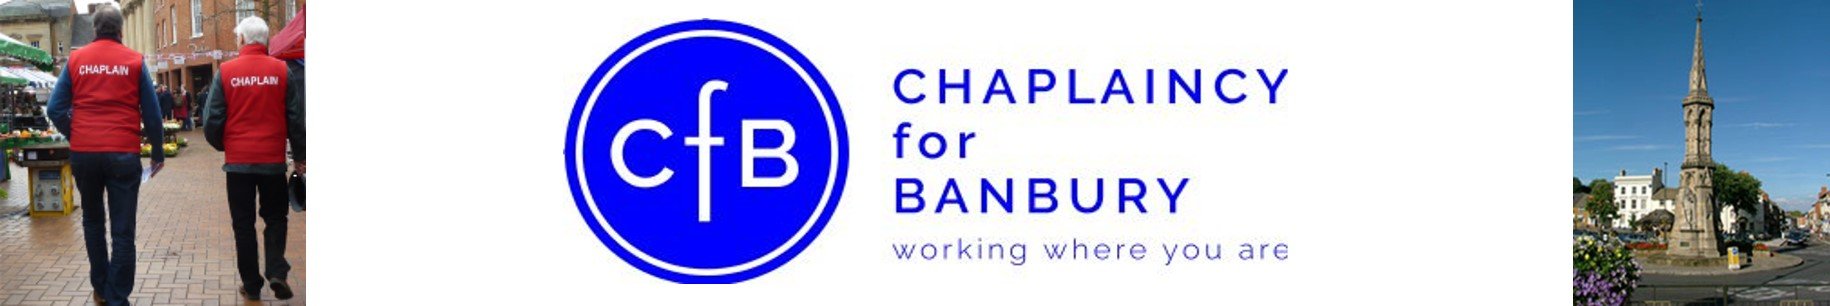 Chaplaincy for Banbury